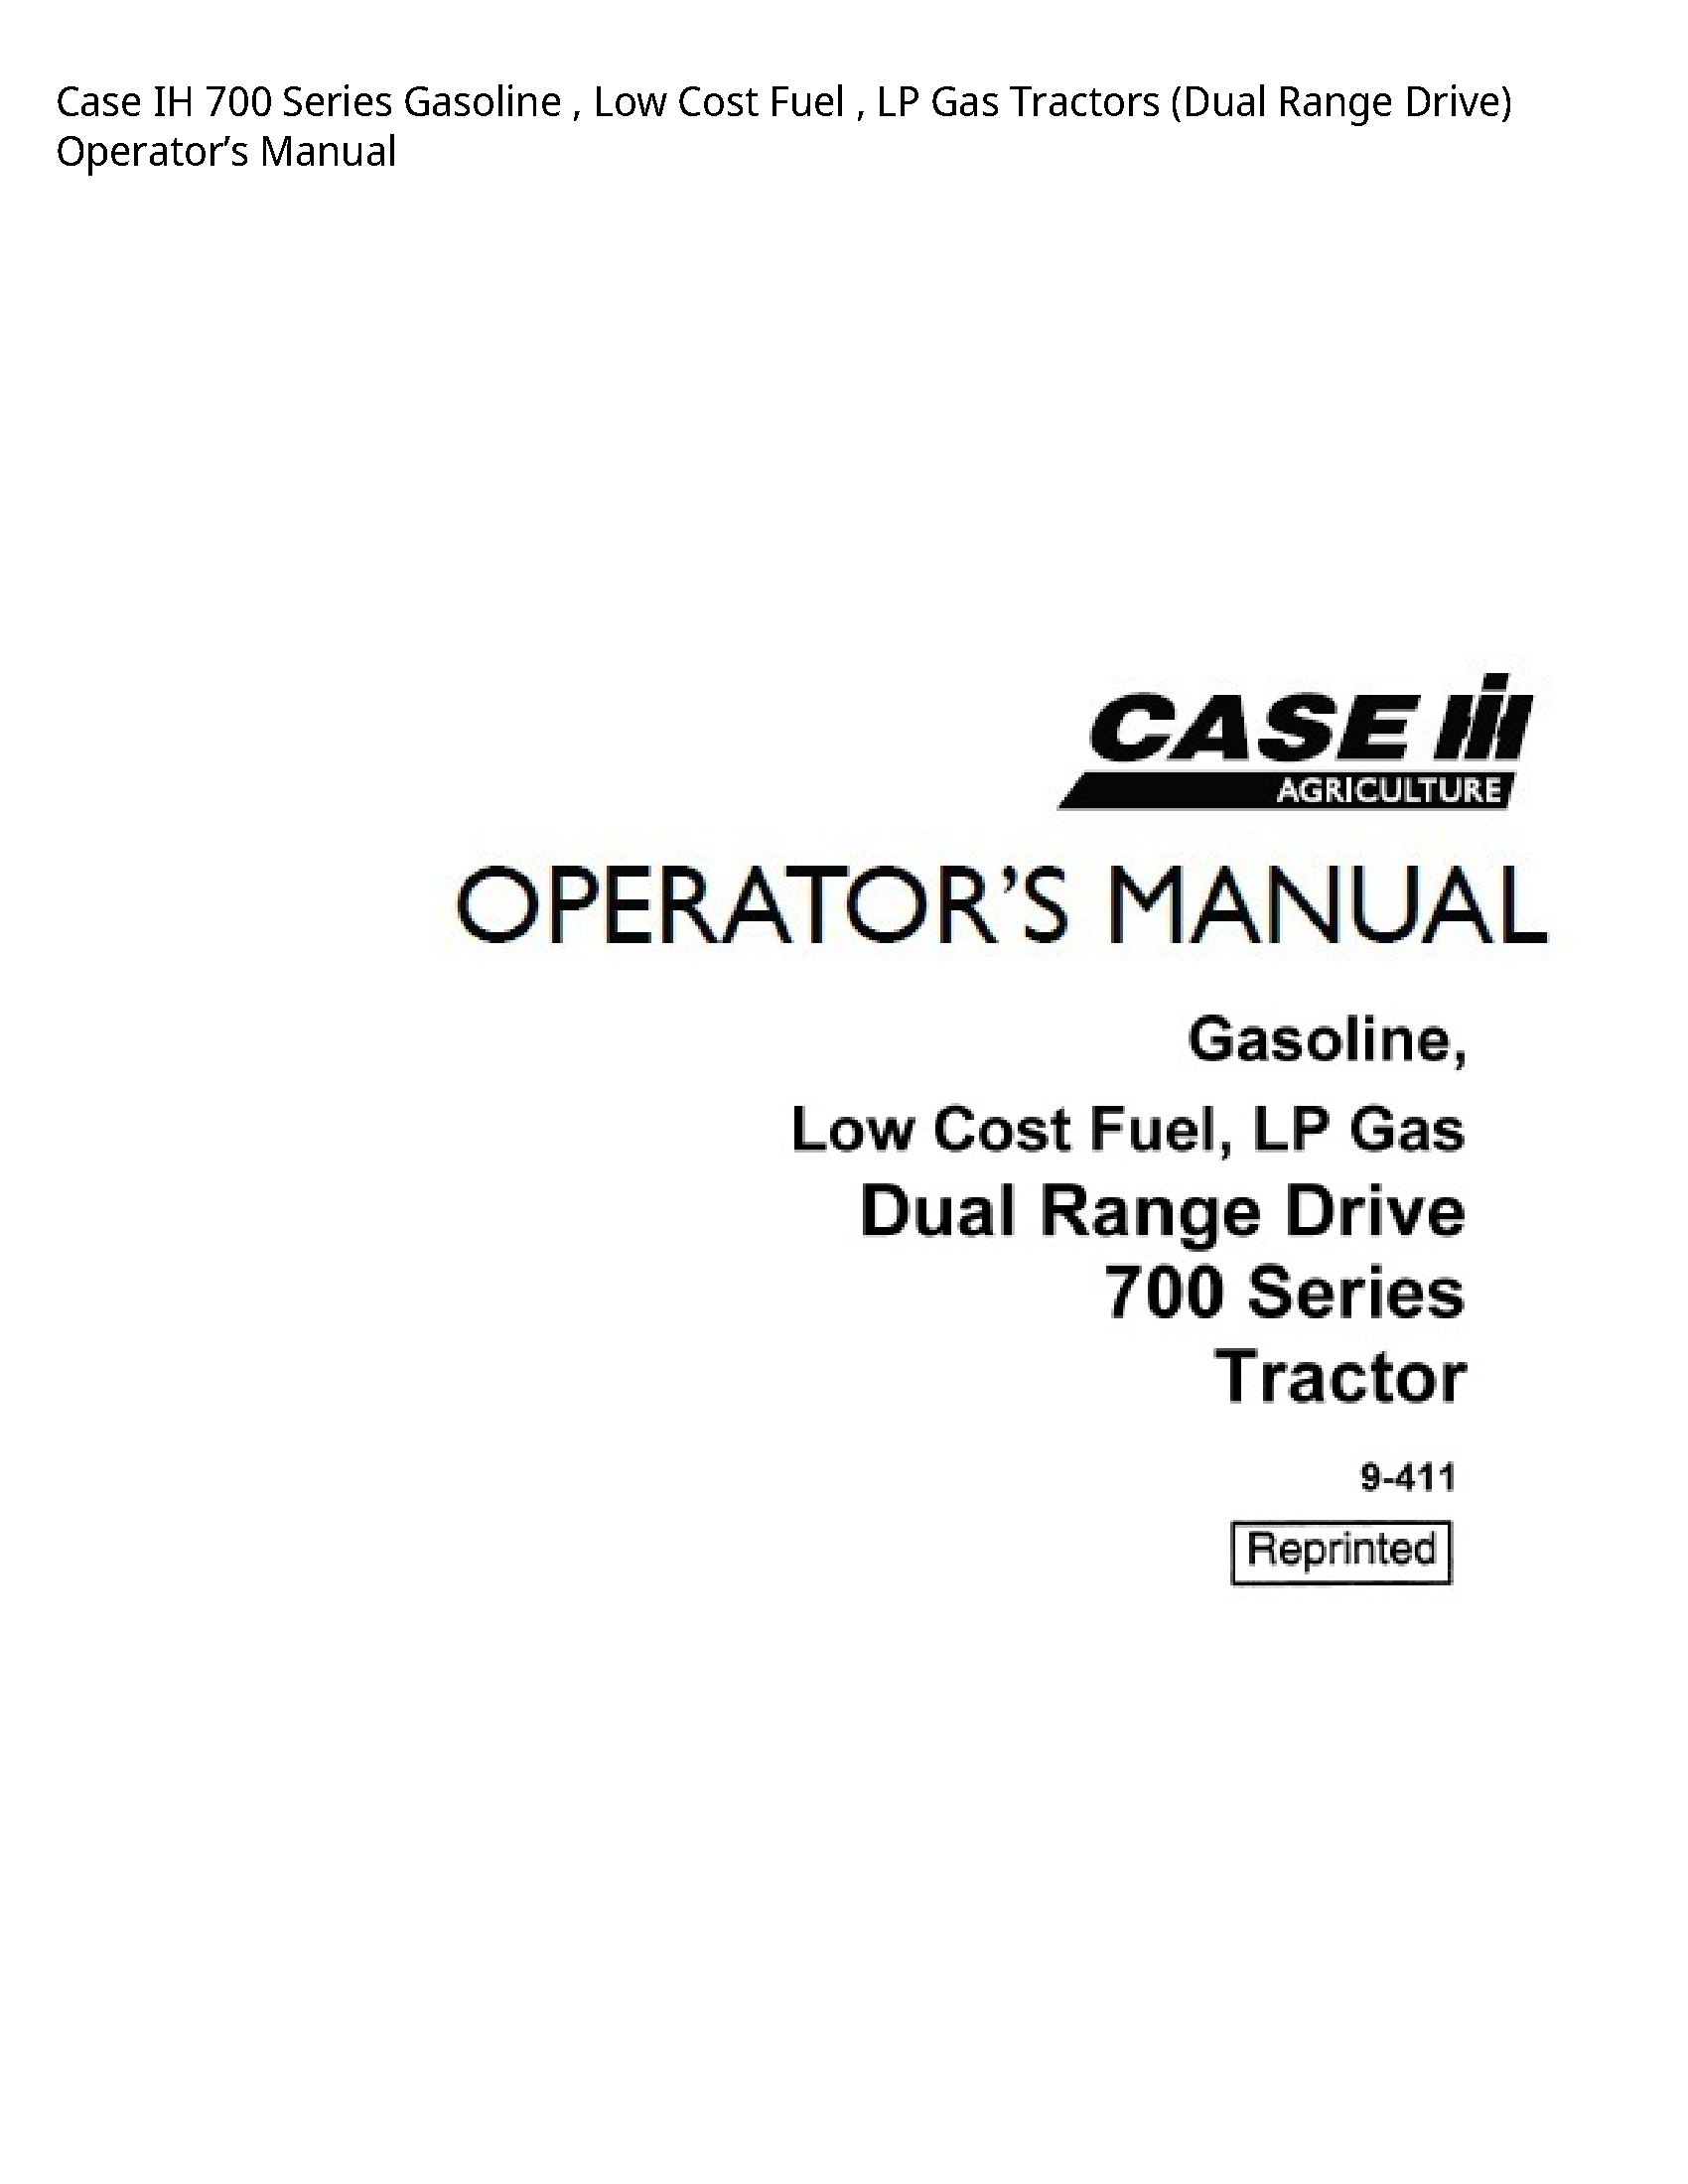 Case/Case IH 700 IH Series Gasoline Low Cost Fuel LP Gas Tractors (Dual Range Drive) Operator’s manual